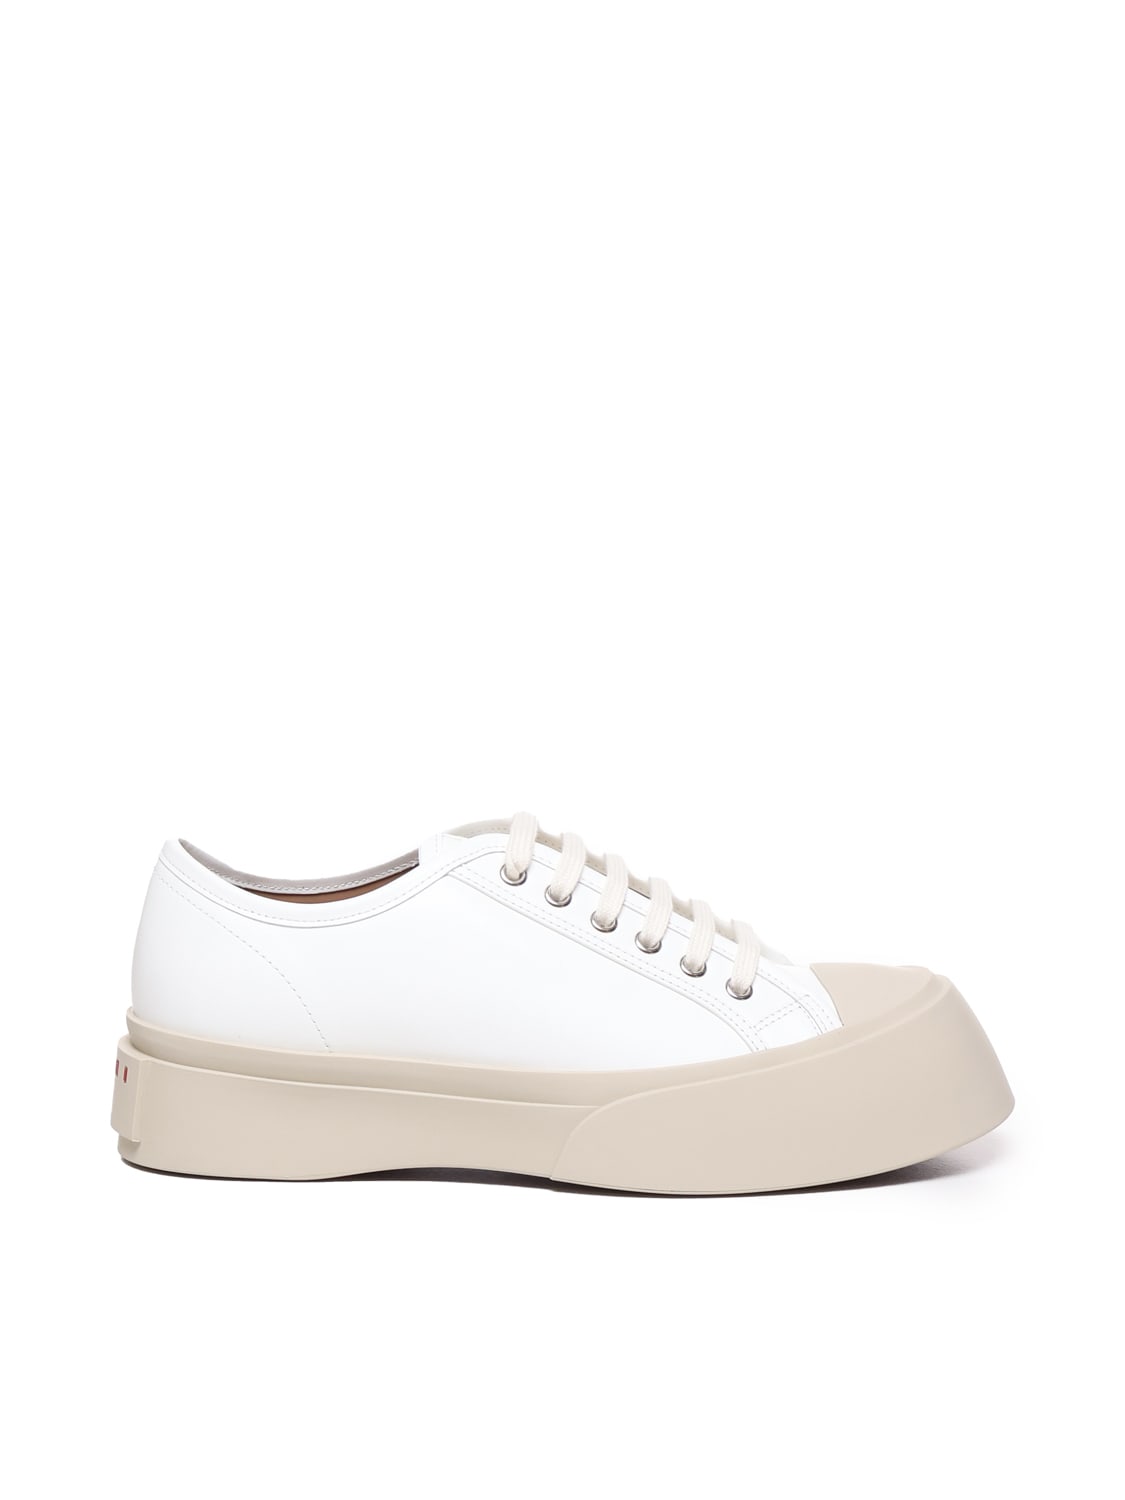 Marni Pablo Sneaker In Nappa Leather In White